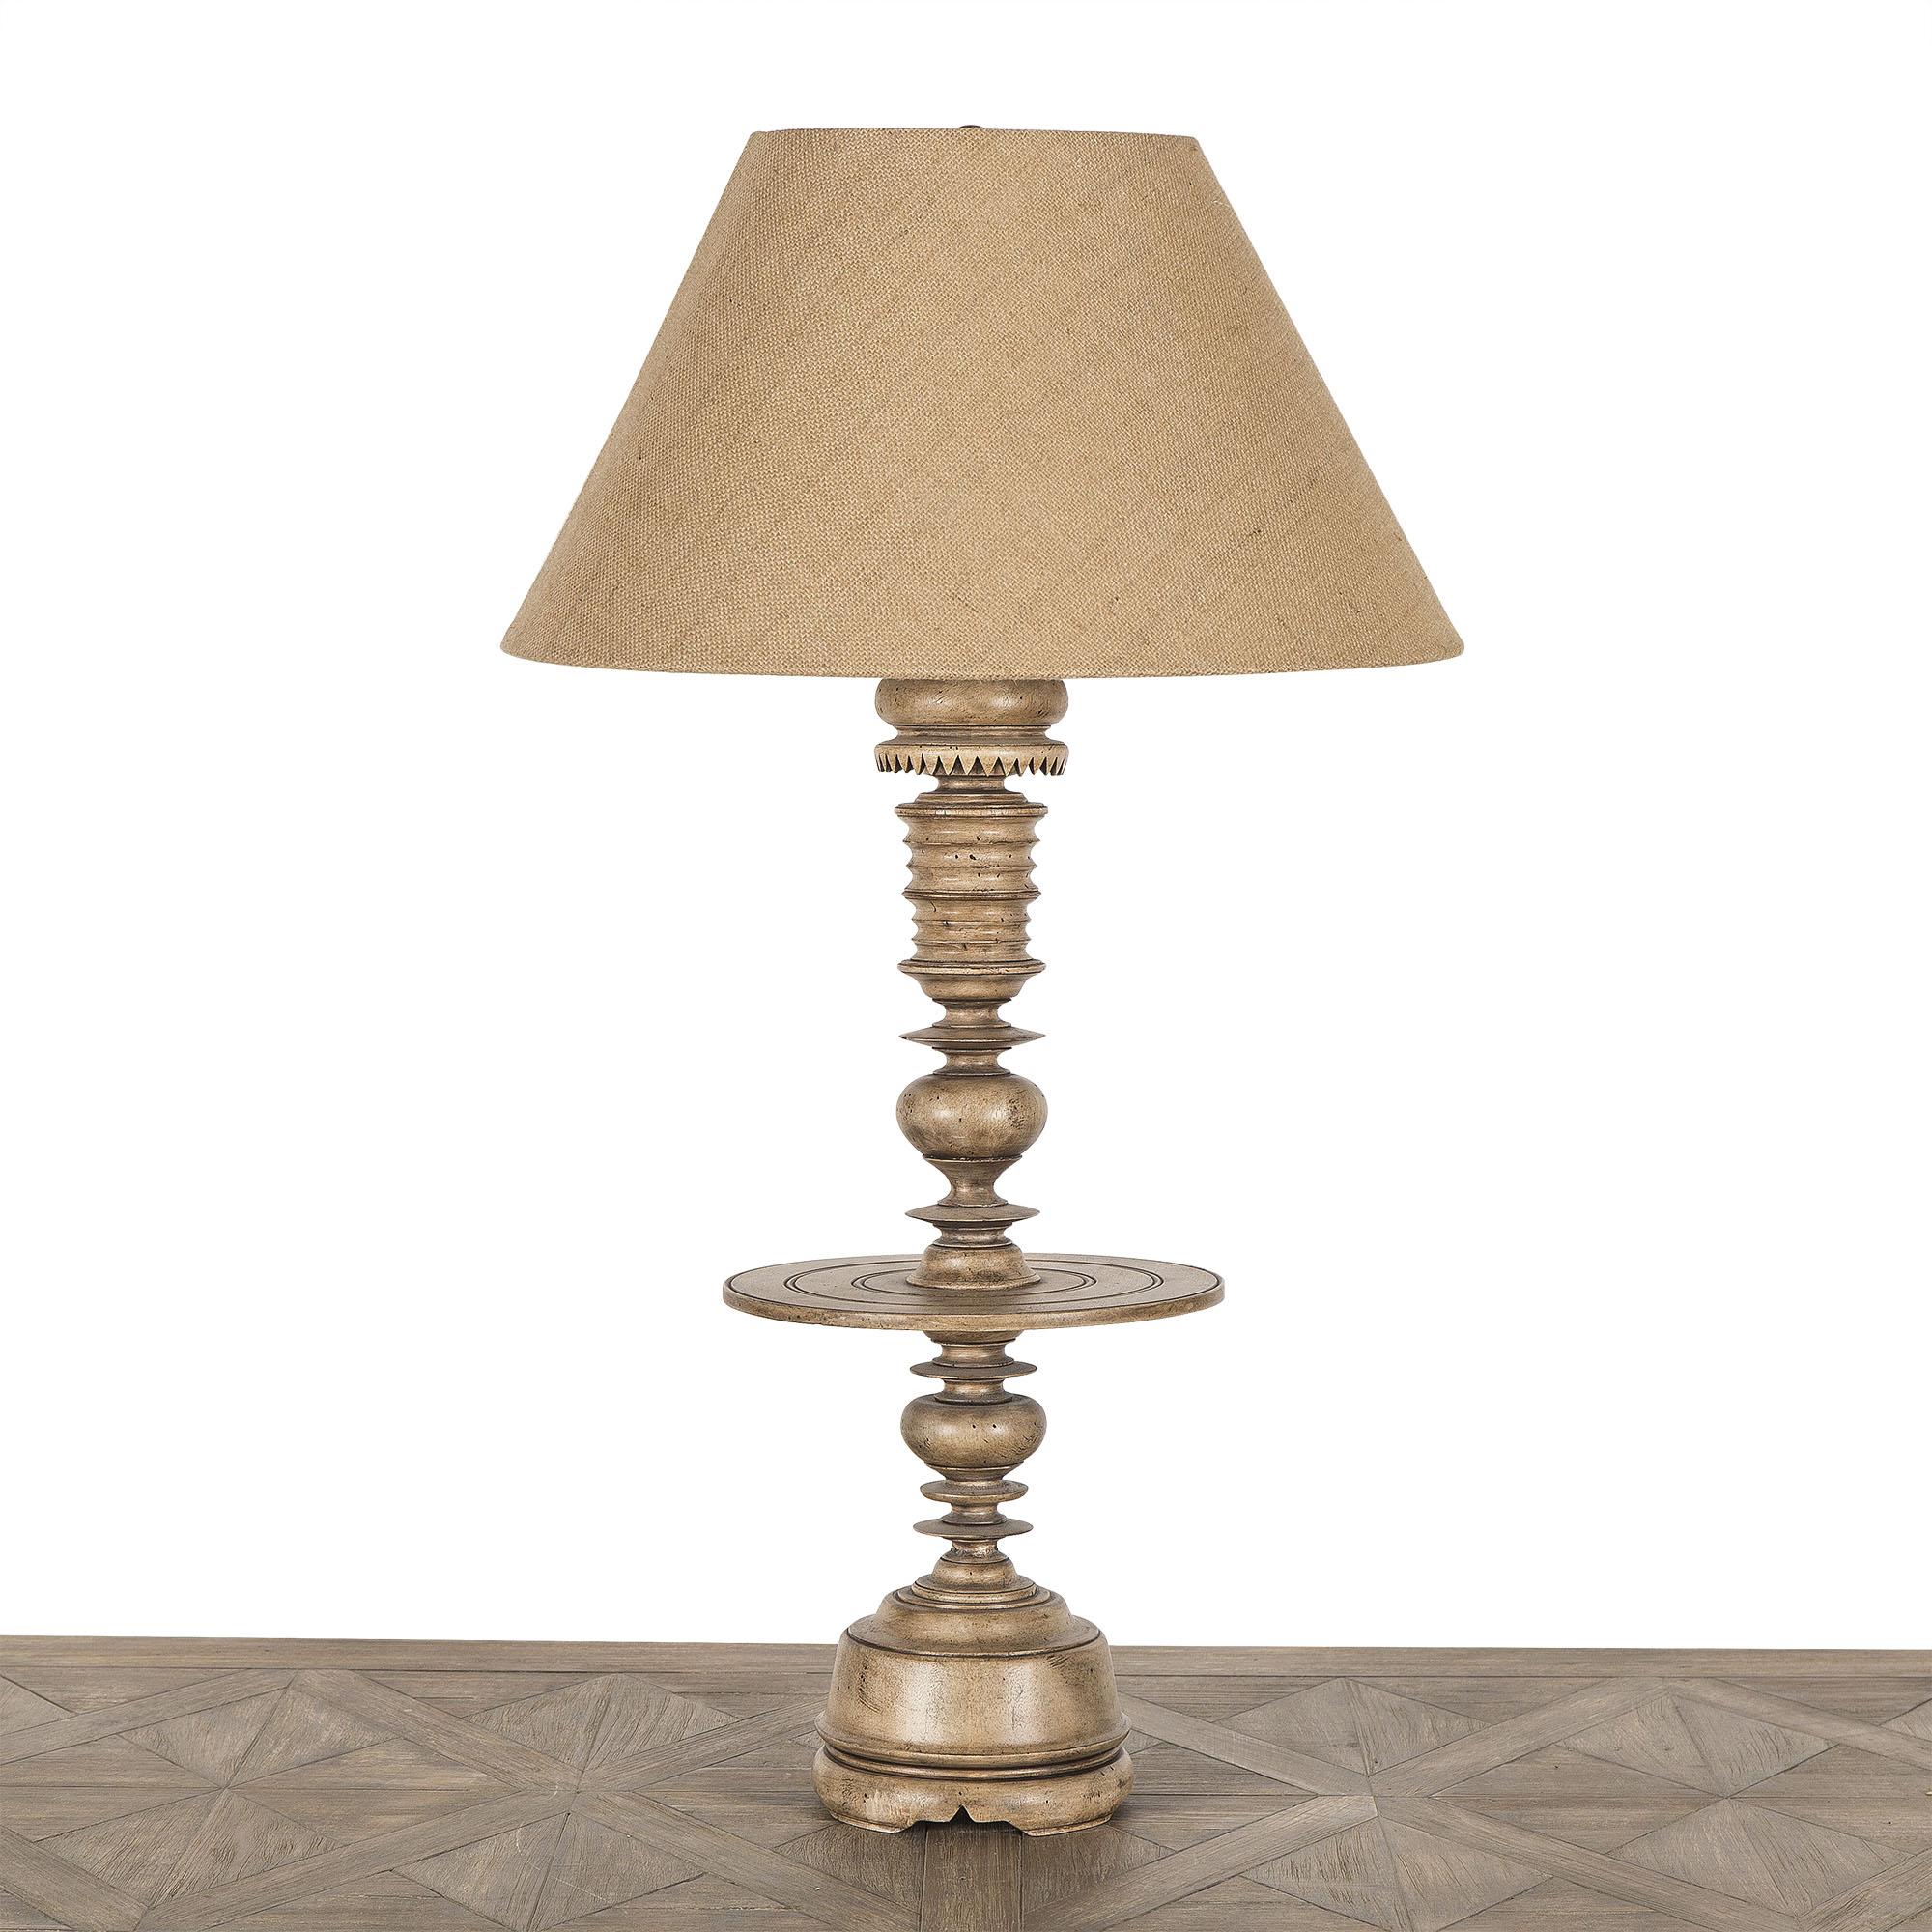 LI061F06 - barcelona table lamp w jute shade.jpg